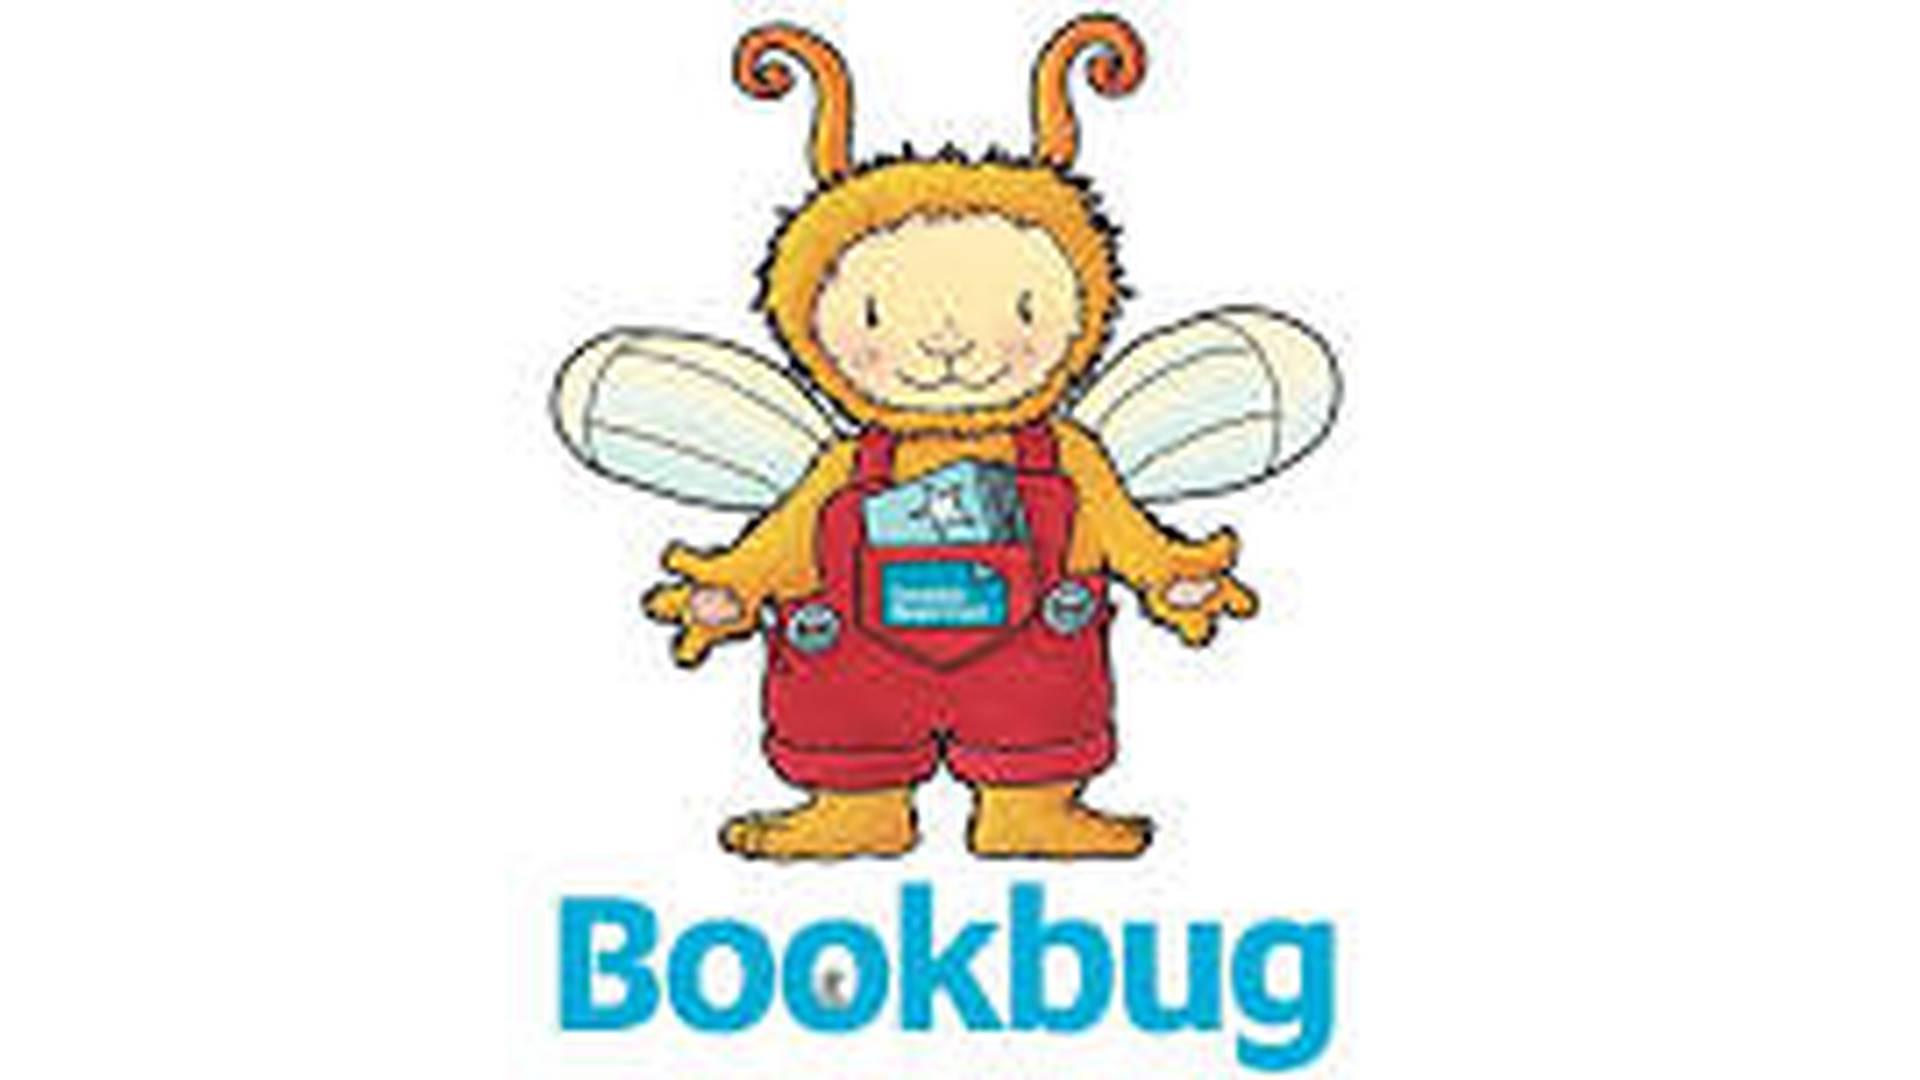 Bookbug photo